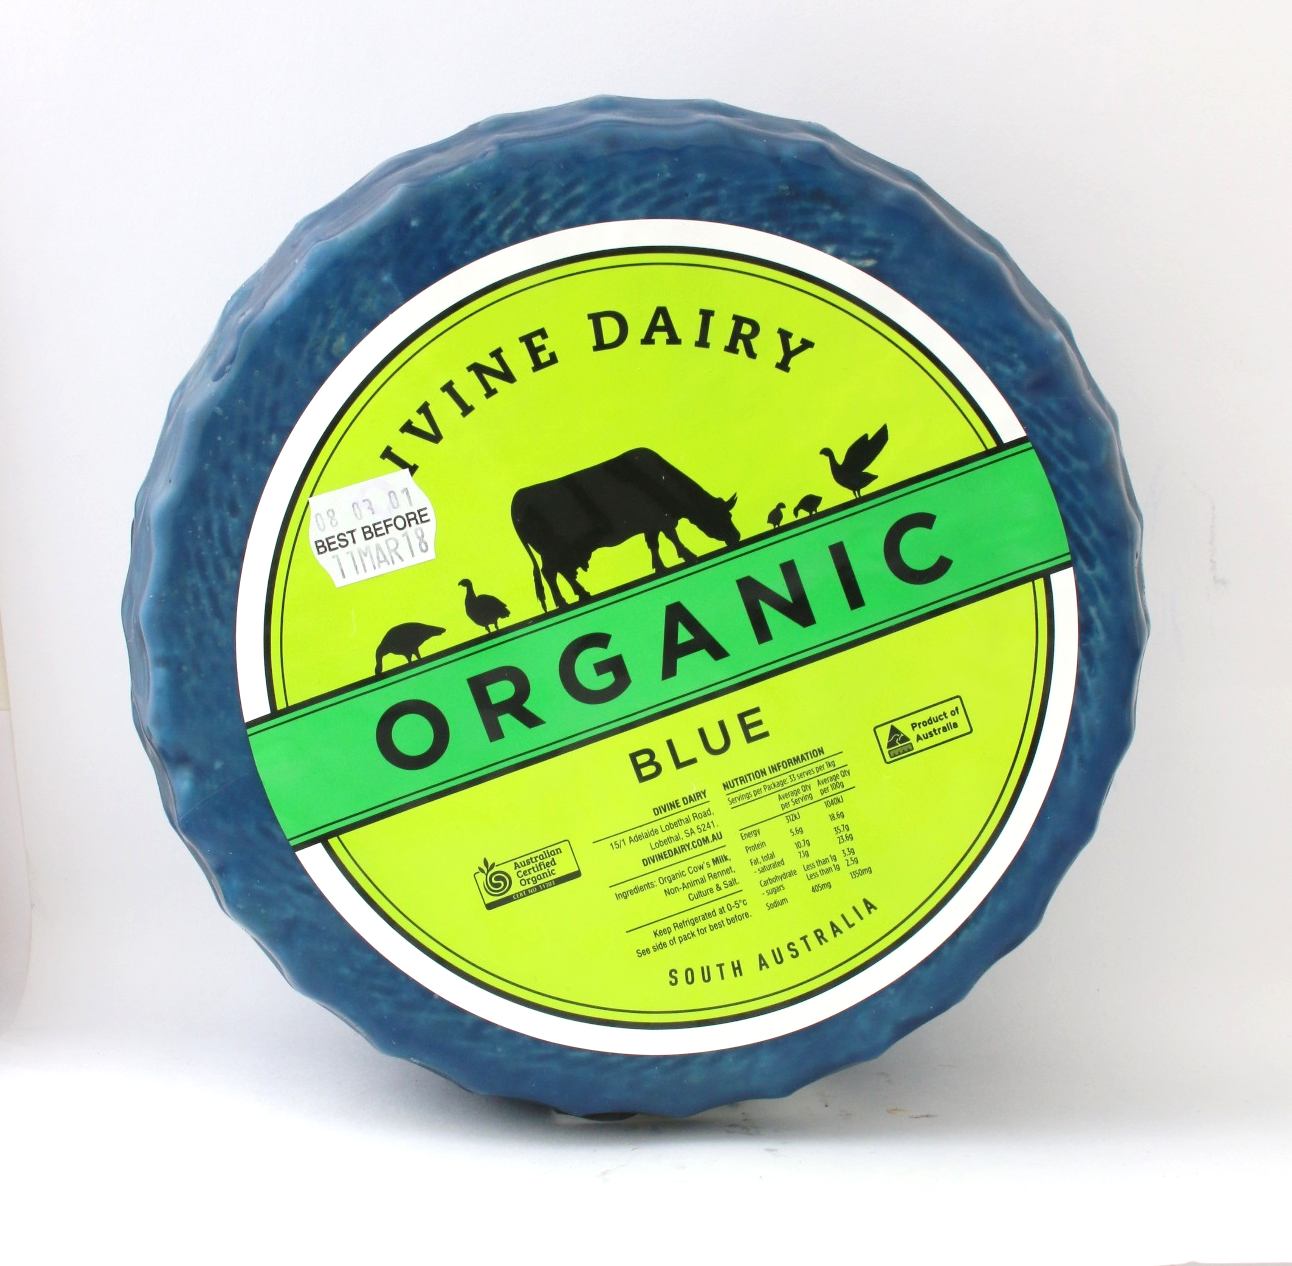 Divine Dairy Blue Wheel Organic (2kg) - The Grocer